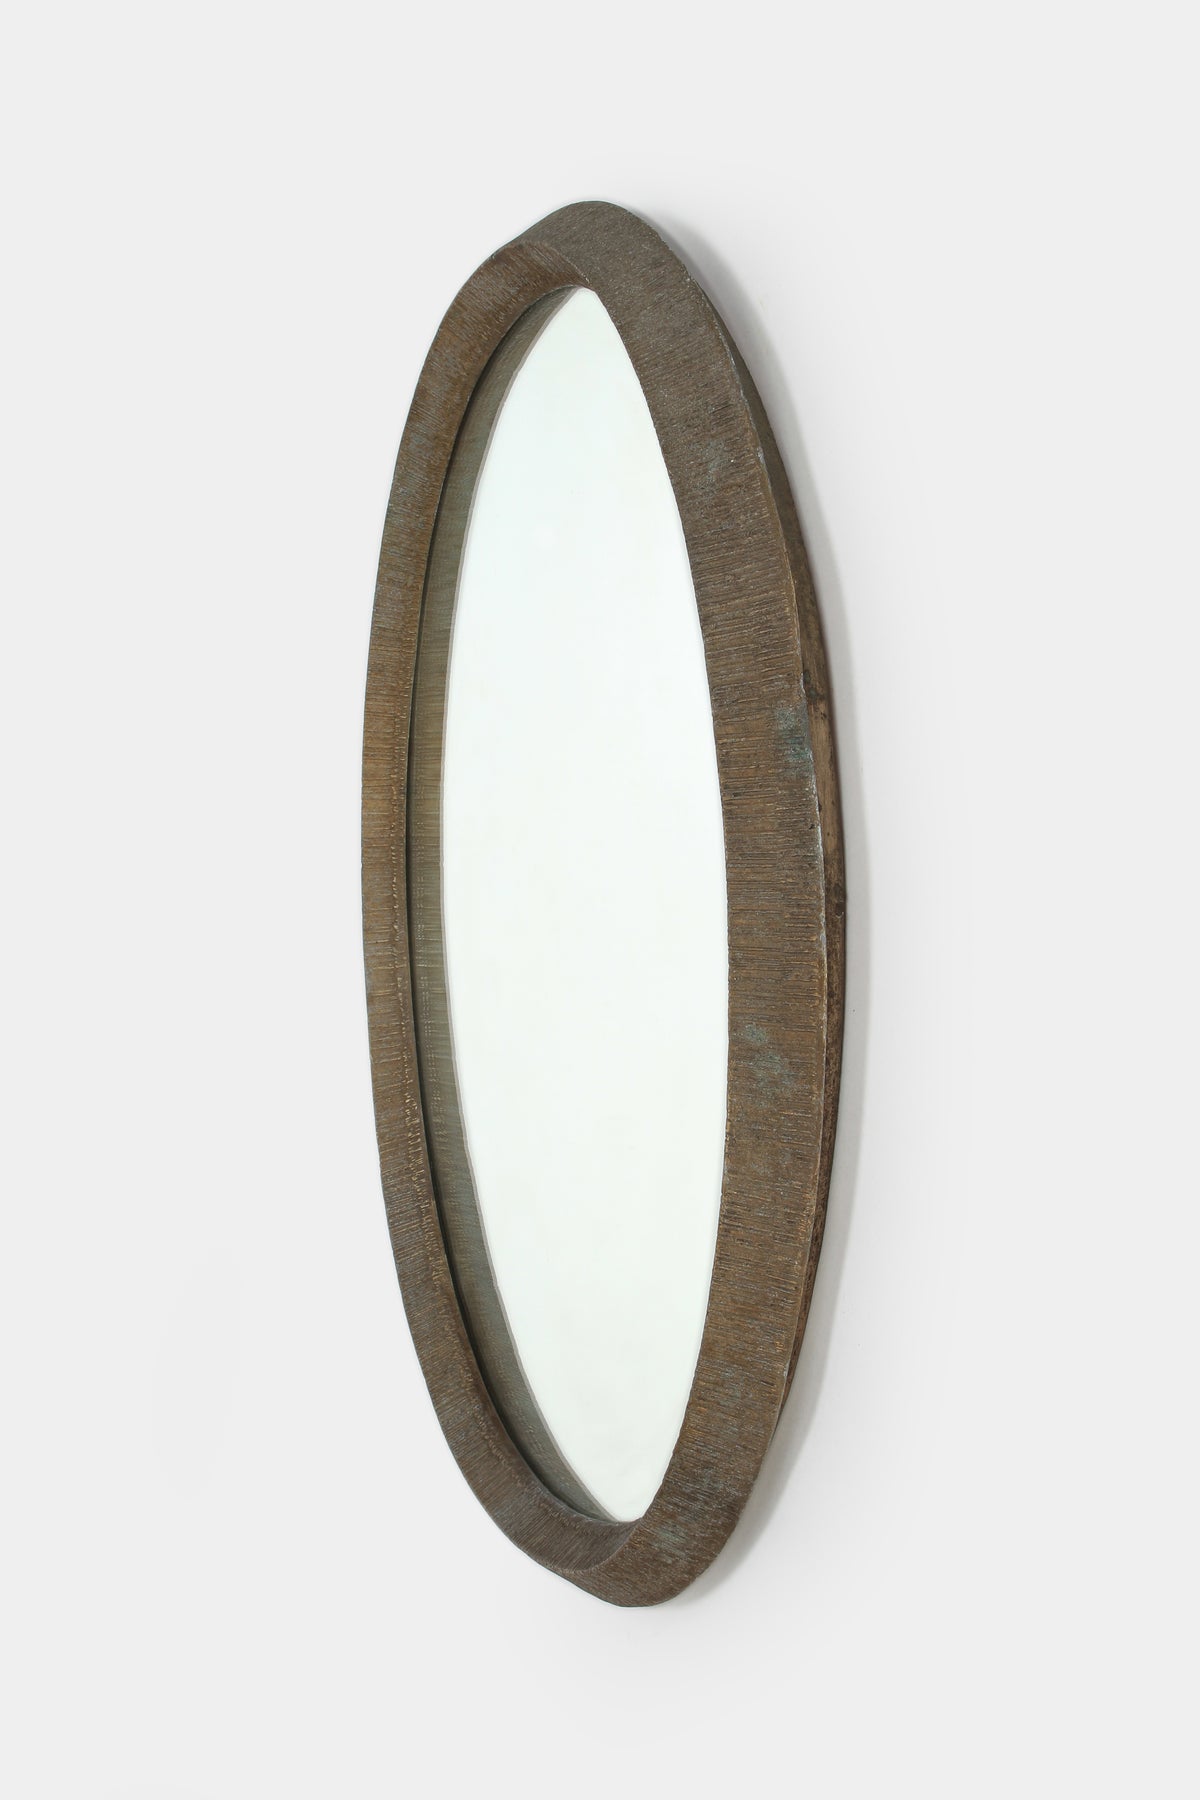 Lorenzo Burchiellaro Mirror, Aluminum, 70s